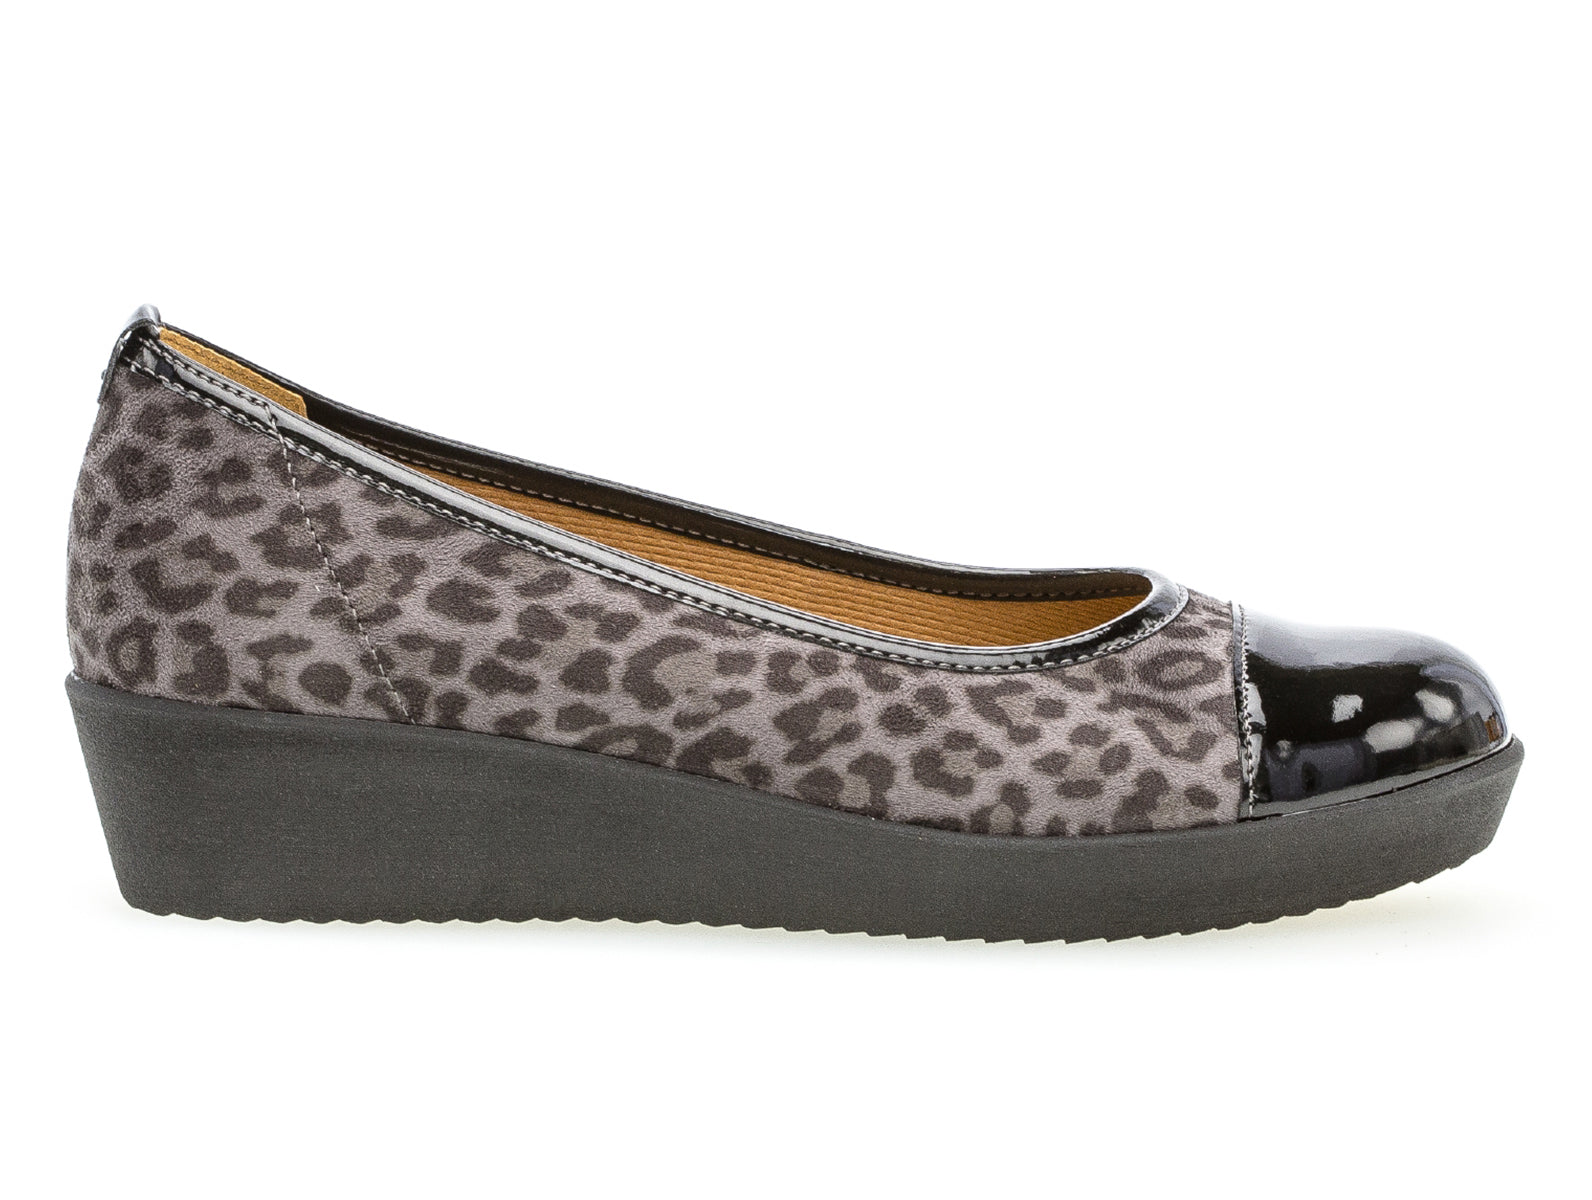 gabor leopard print sandals